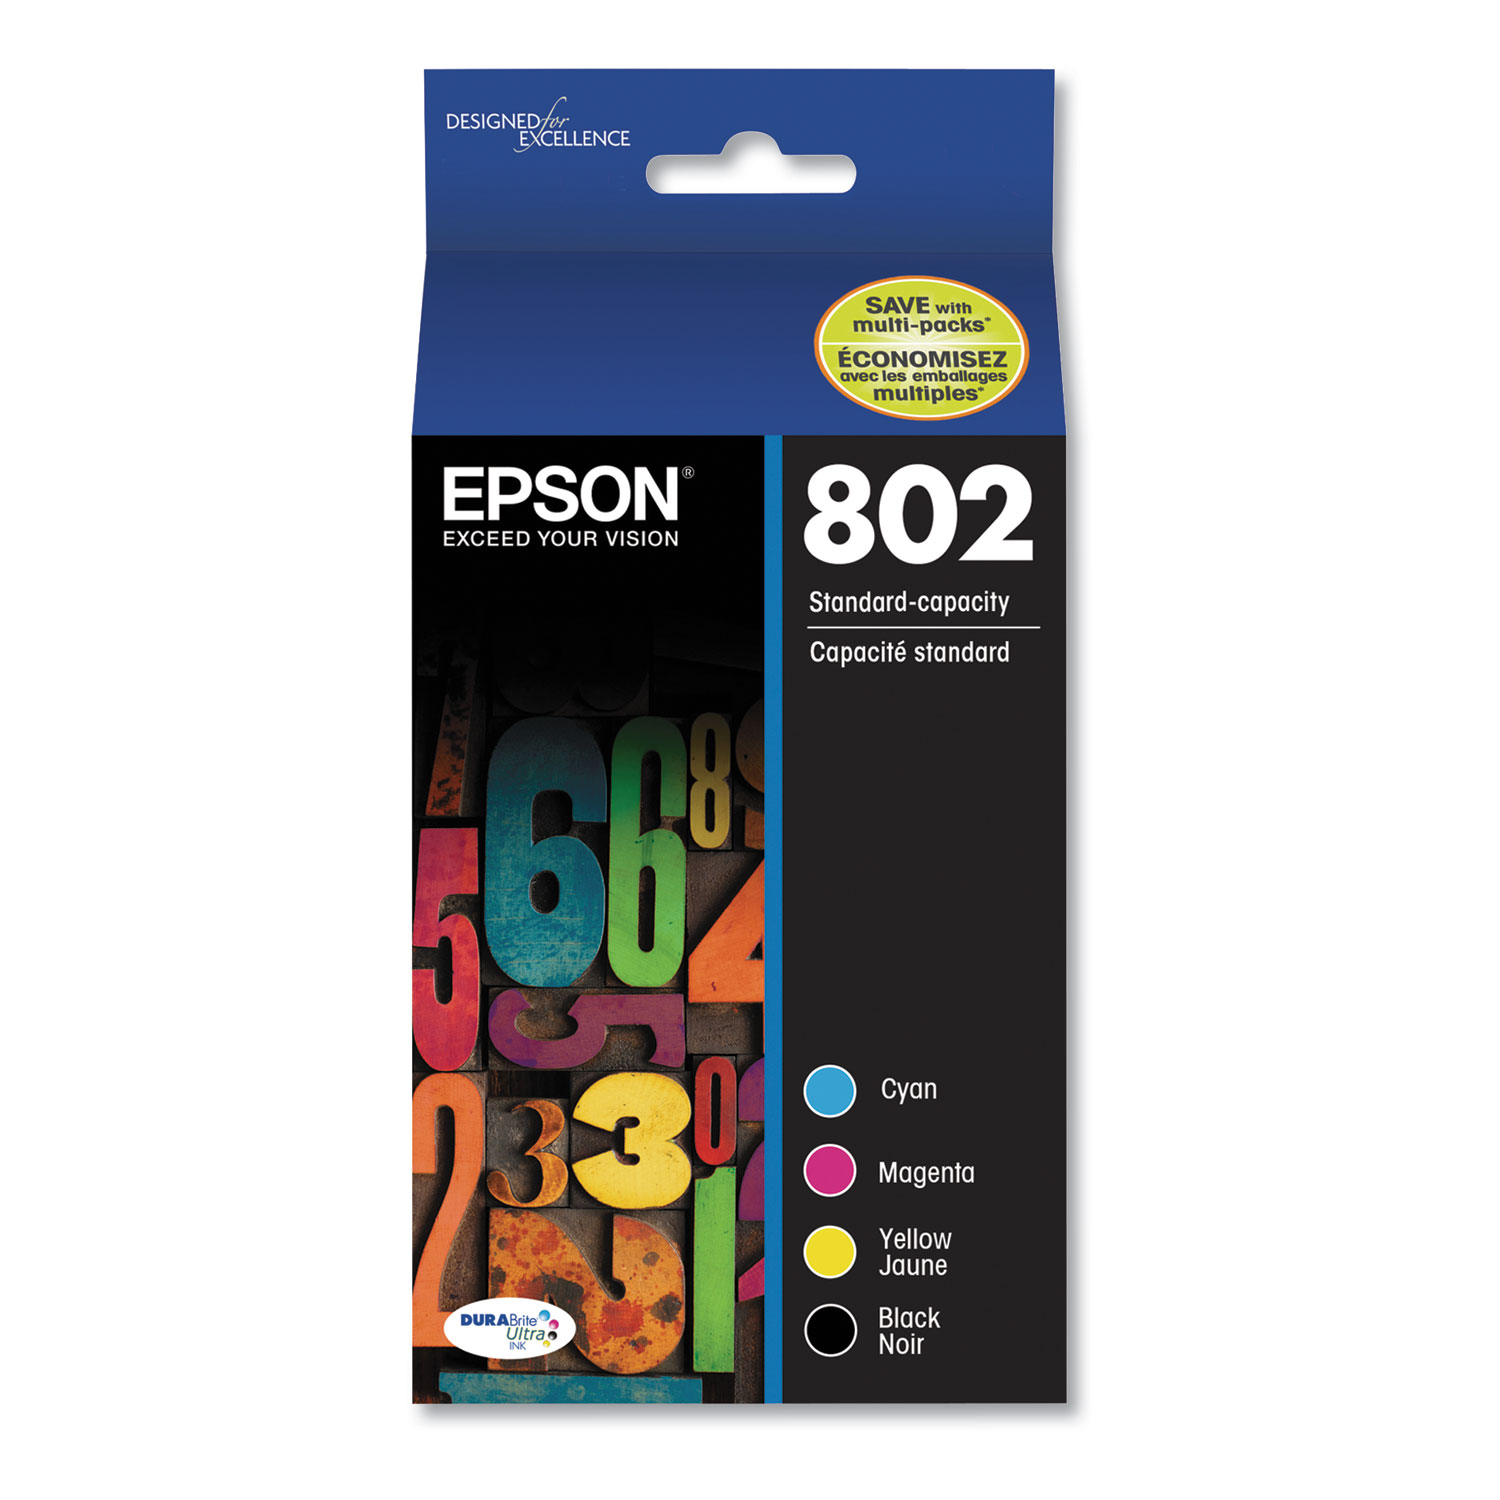 Epson DURABrite Pro 912XL Original High Yield Inkjet Ink Cartridge -  Magenta Pack - 4600 Pages